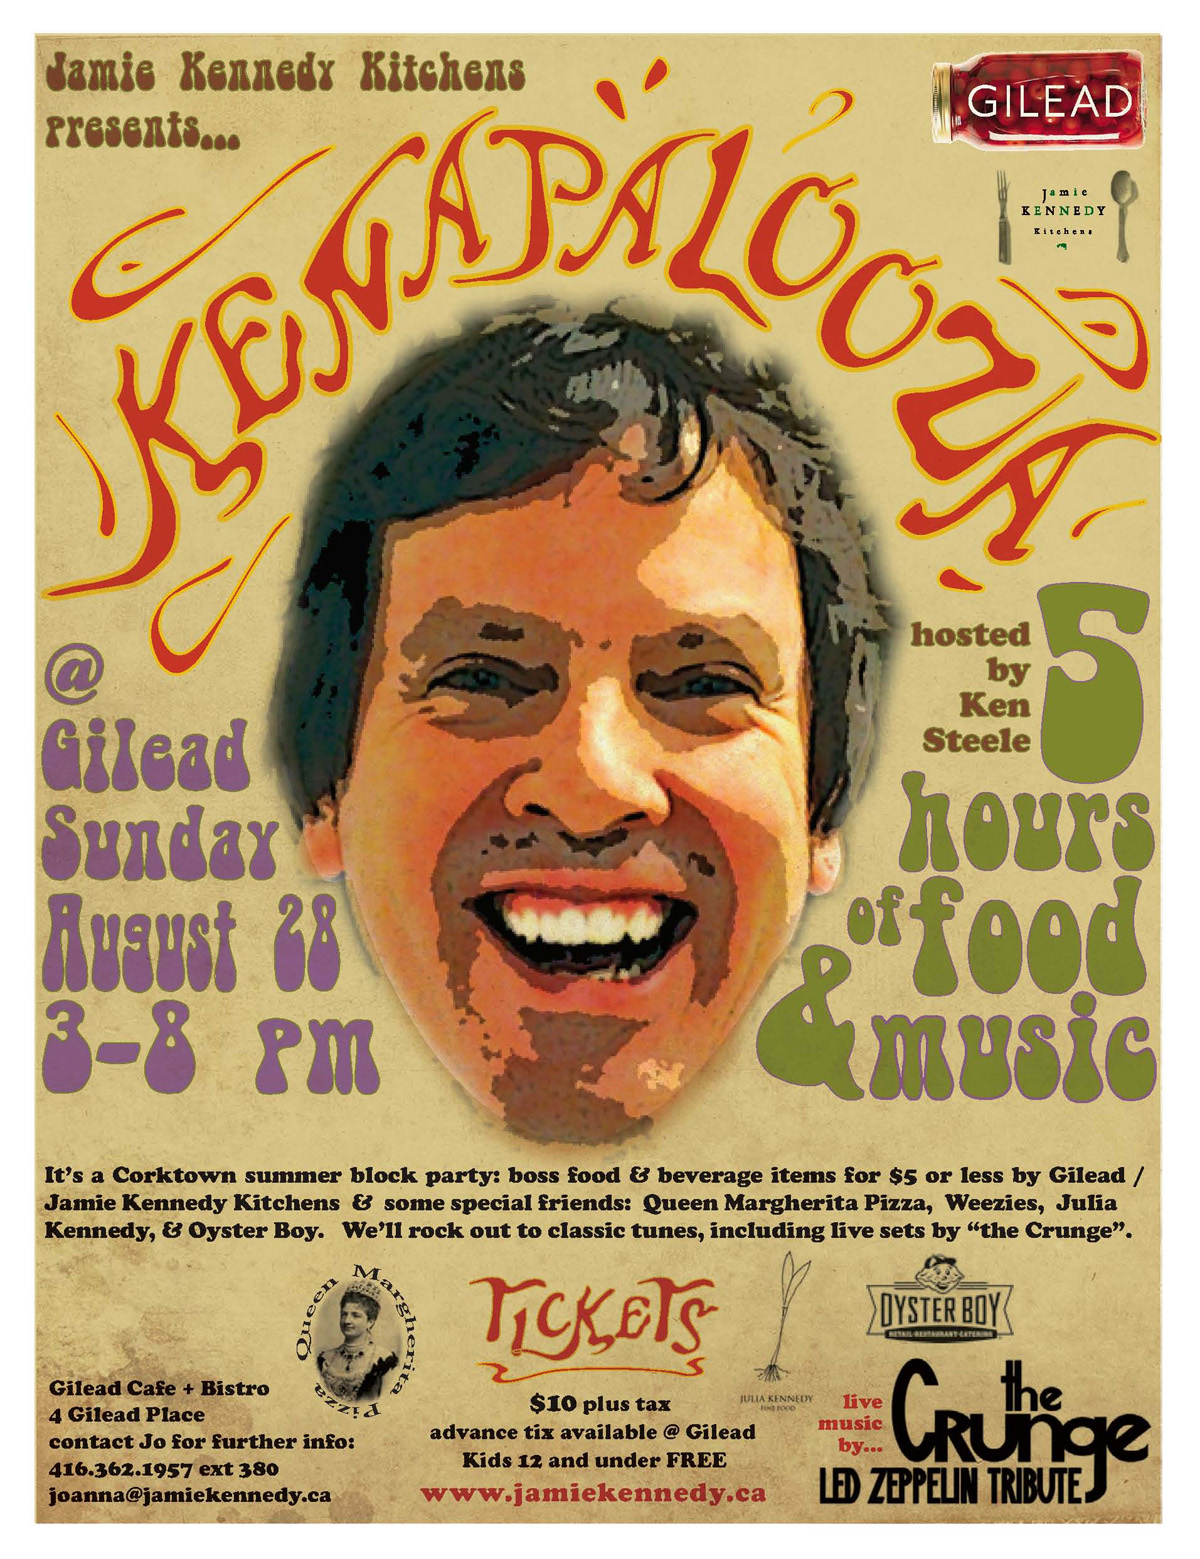 Jamie Kennedy Kitchens presents KENAPALOOZA